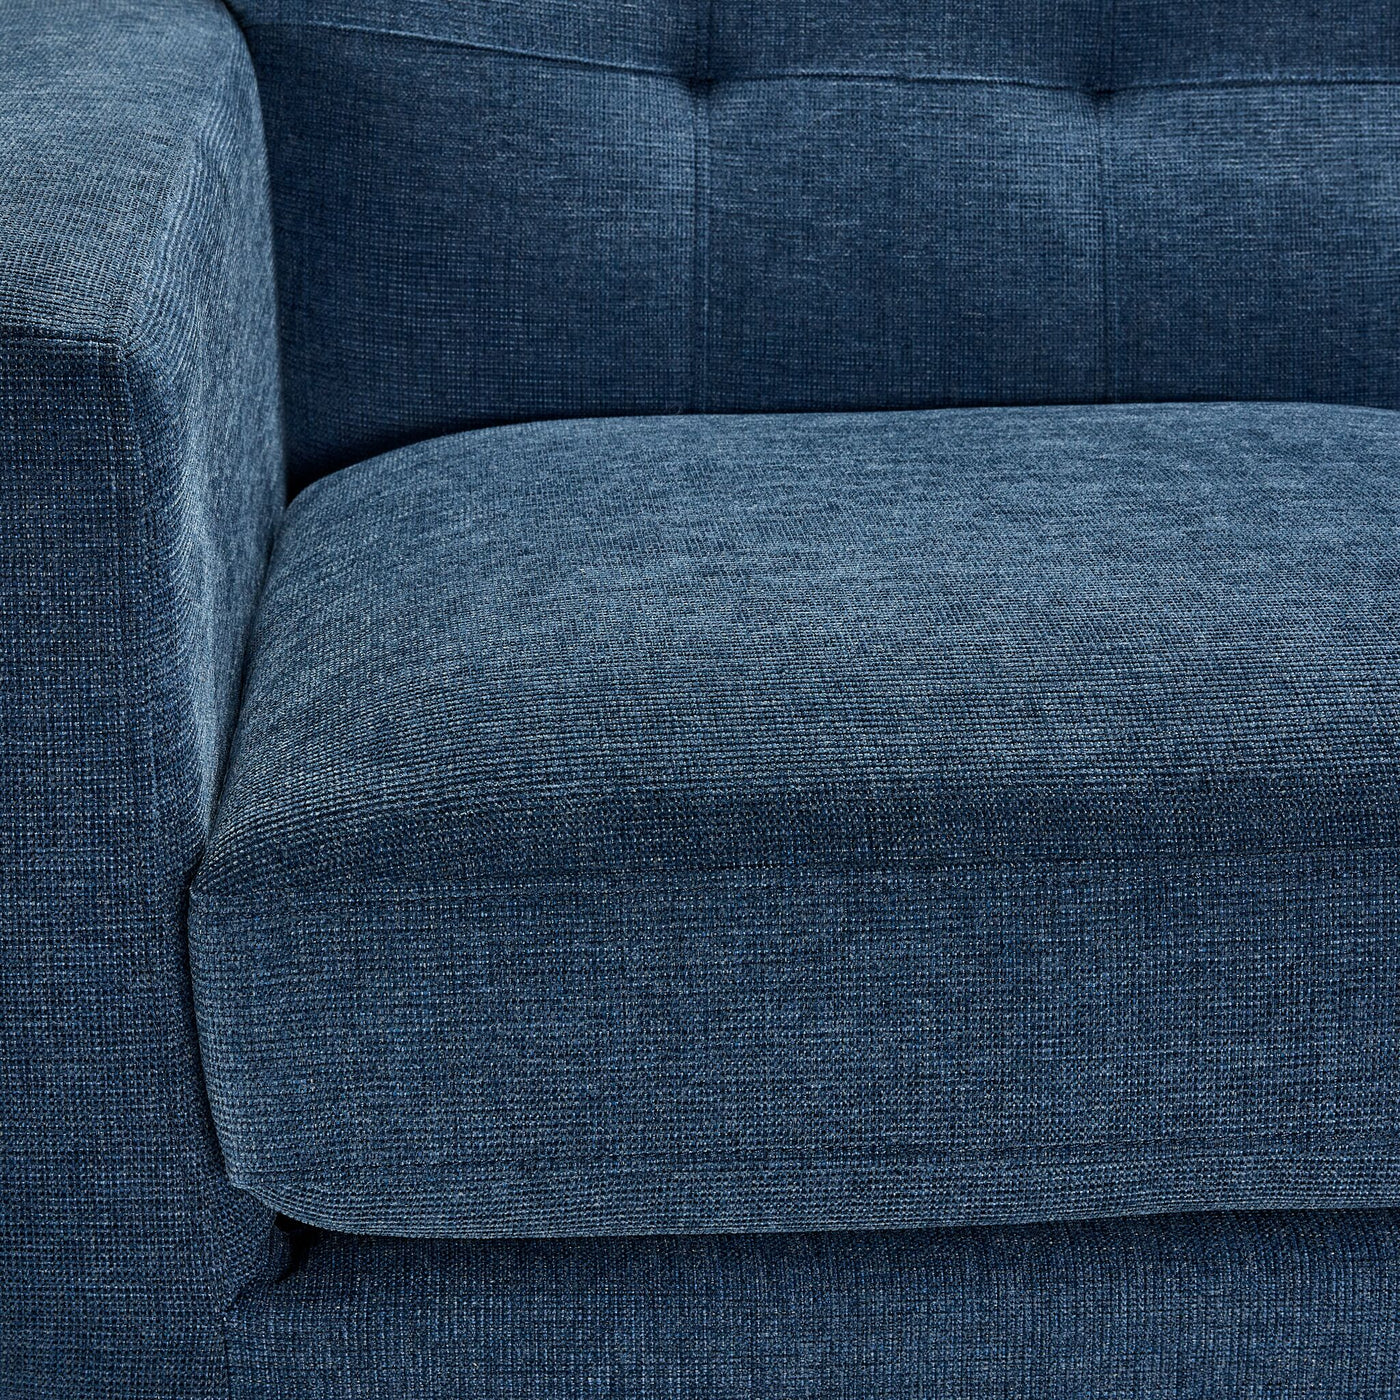 Ziva Sofa and Chair Set - Blue